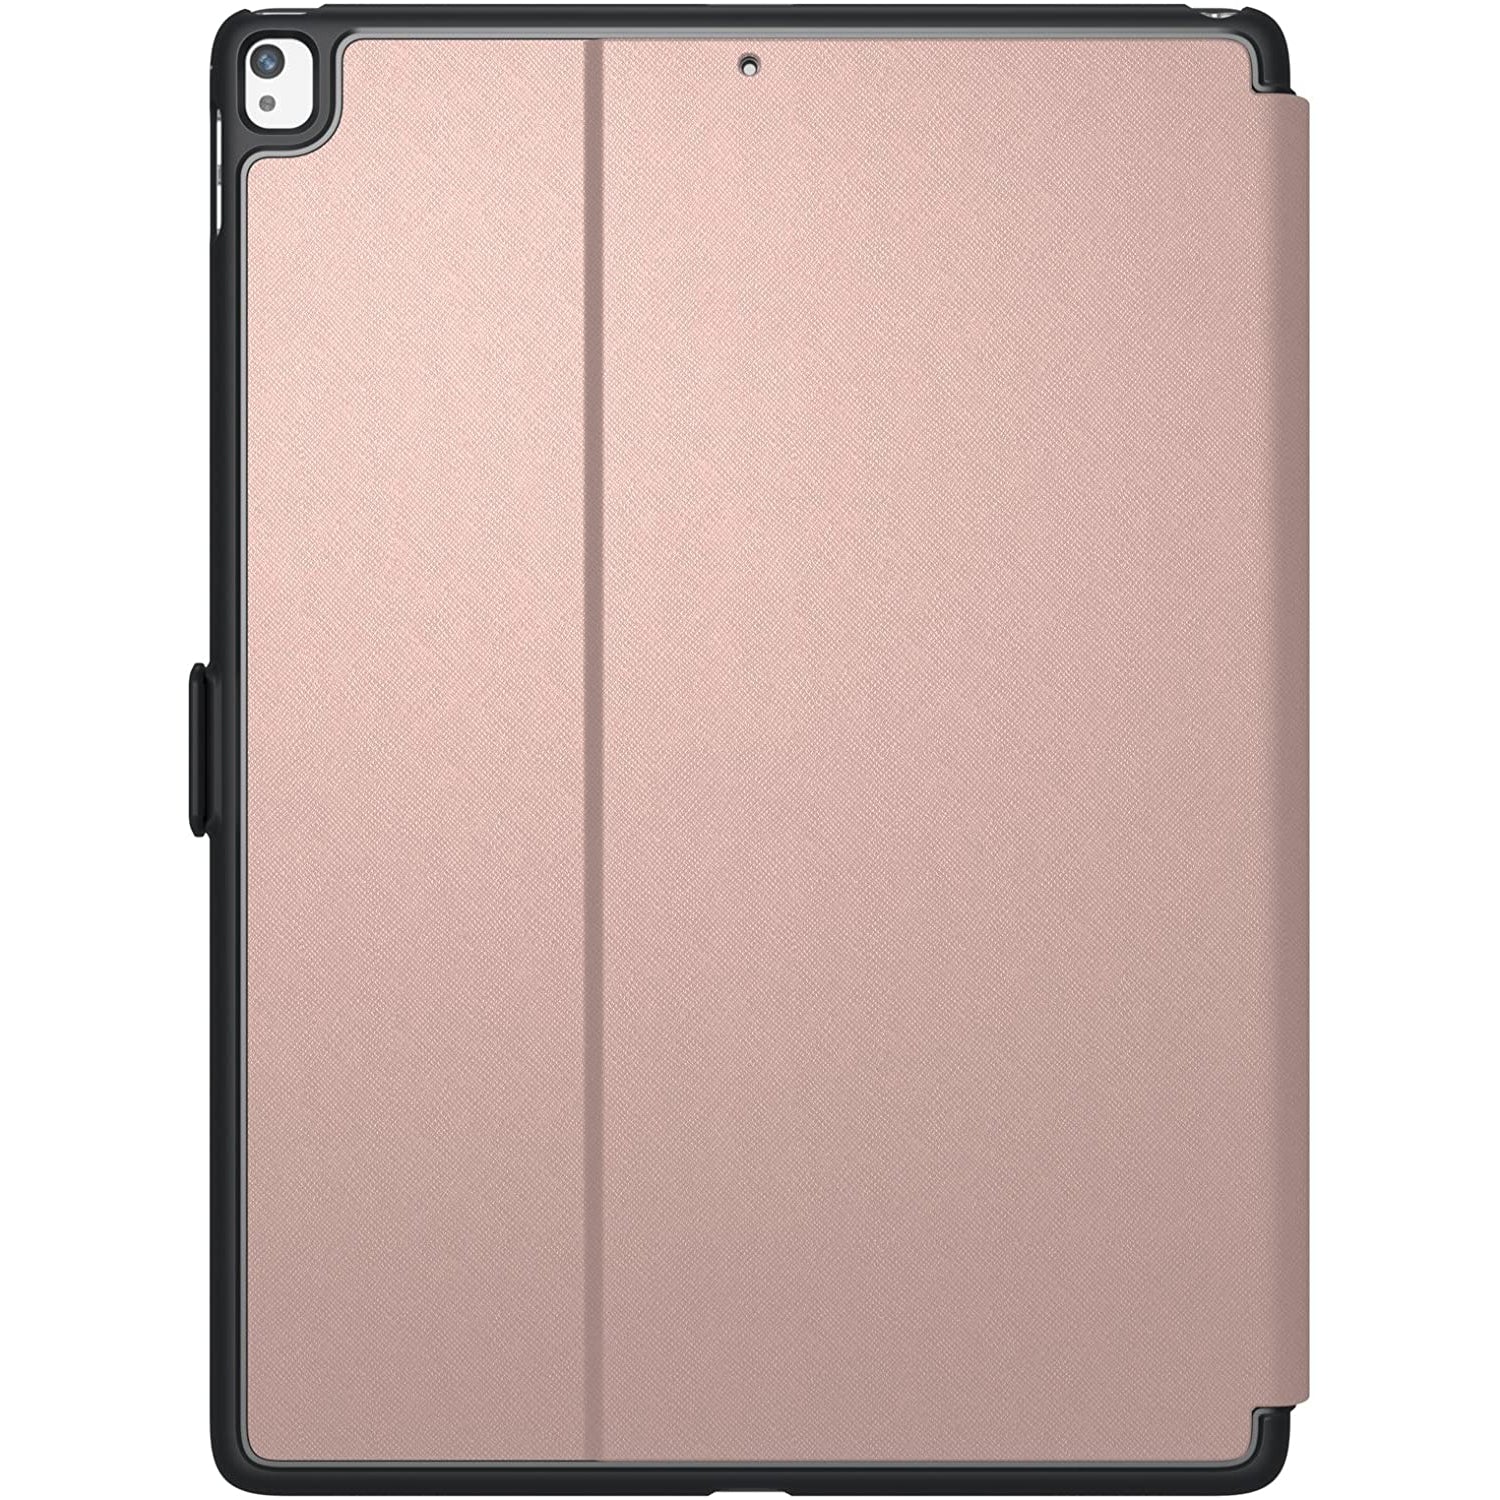 Speck Balance Folio Case for 9.7-inch iPad - Rose Gold